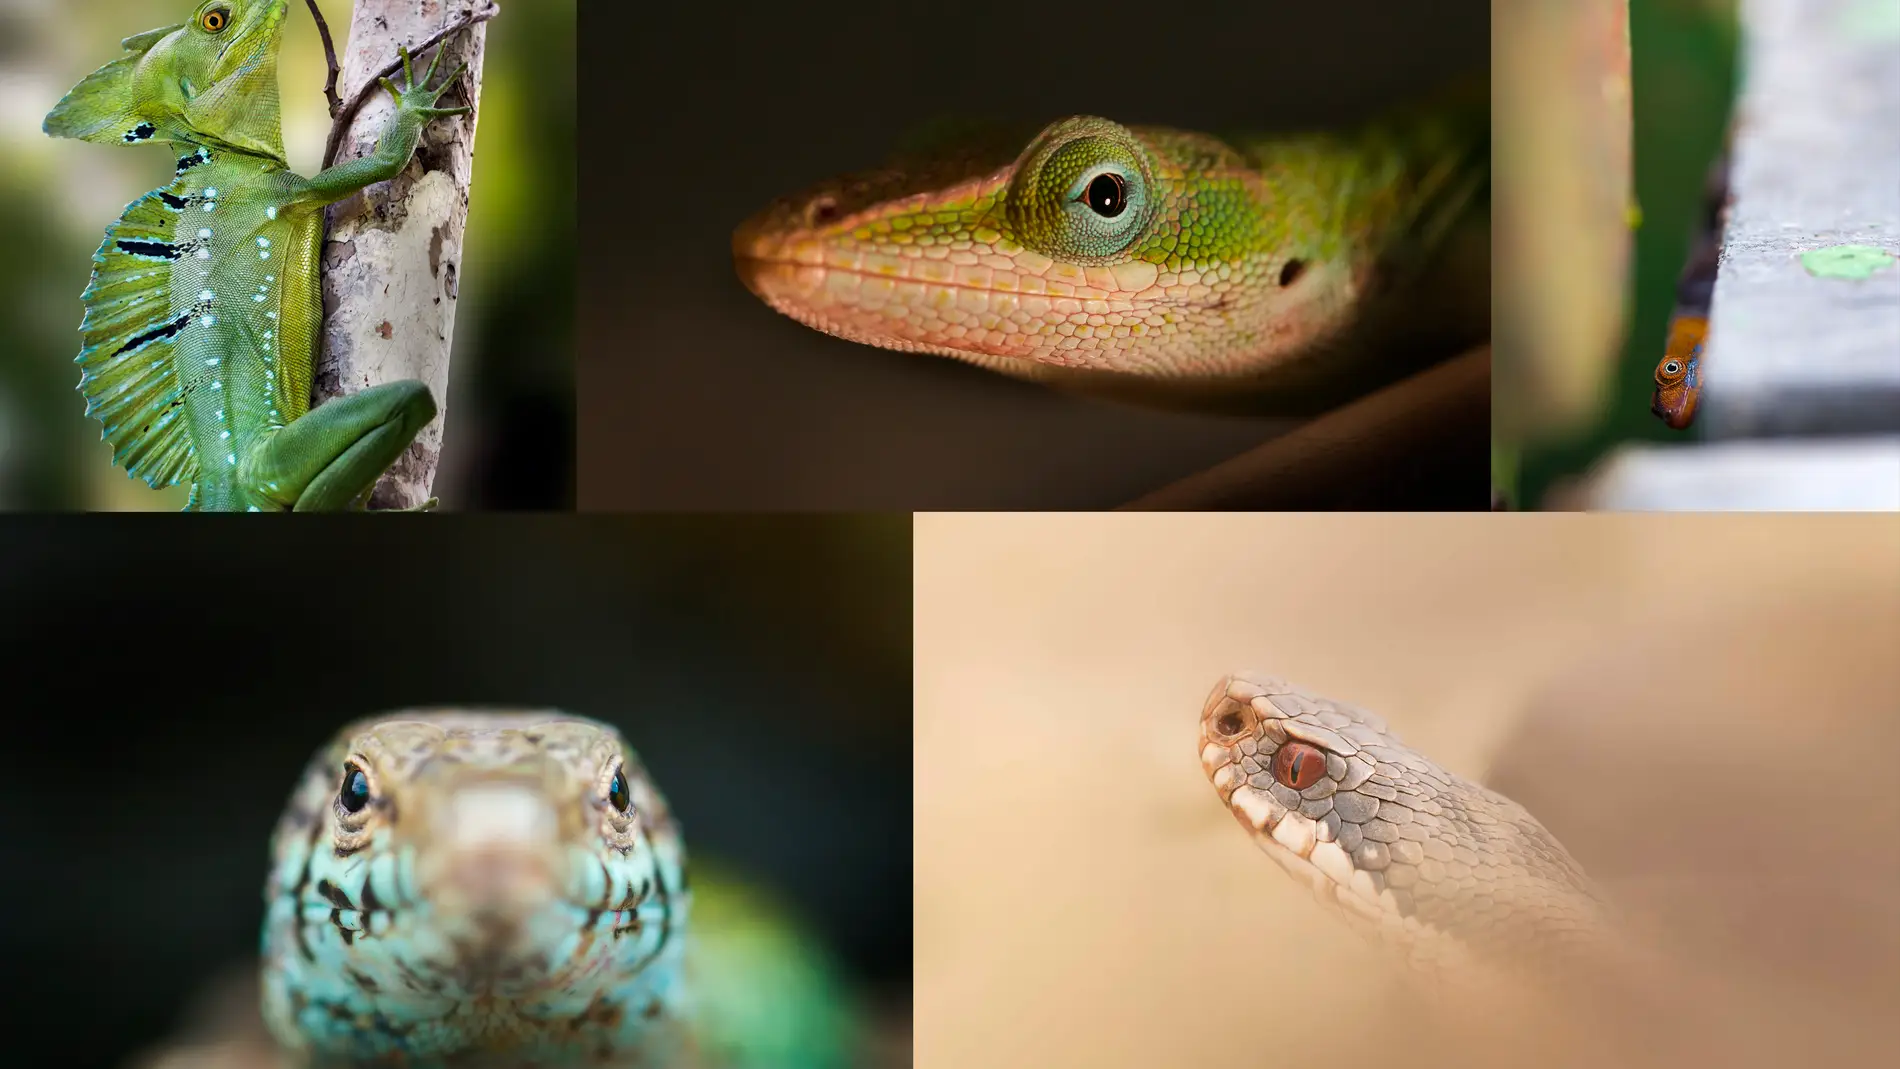 Asi evolucionaron las glandulas para la comunicacion entre reptiles